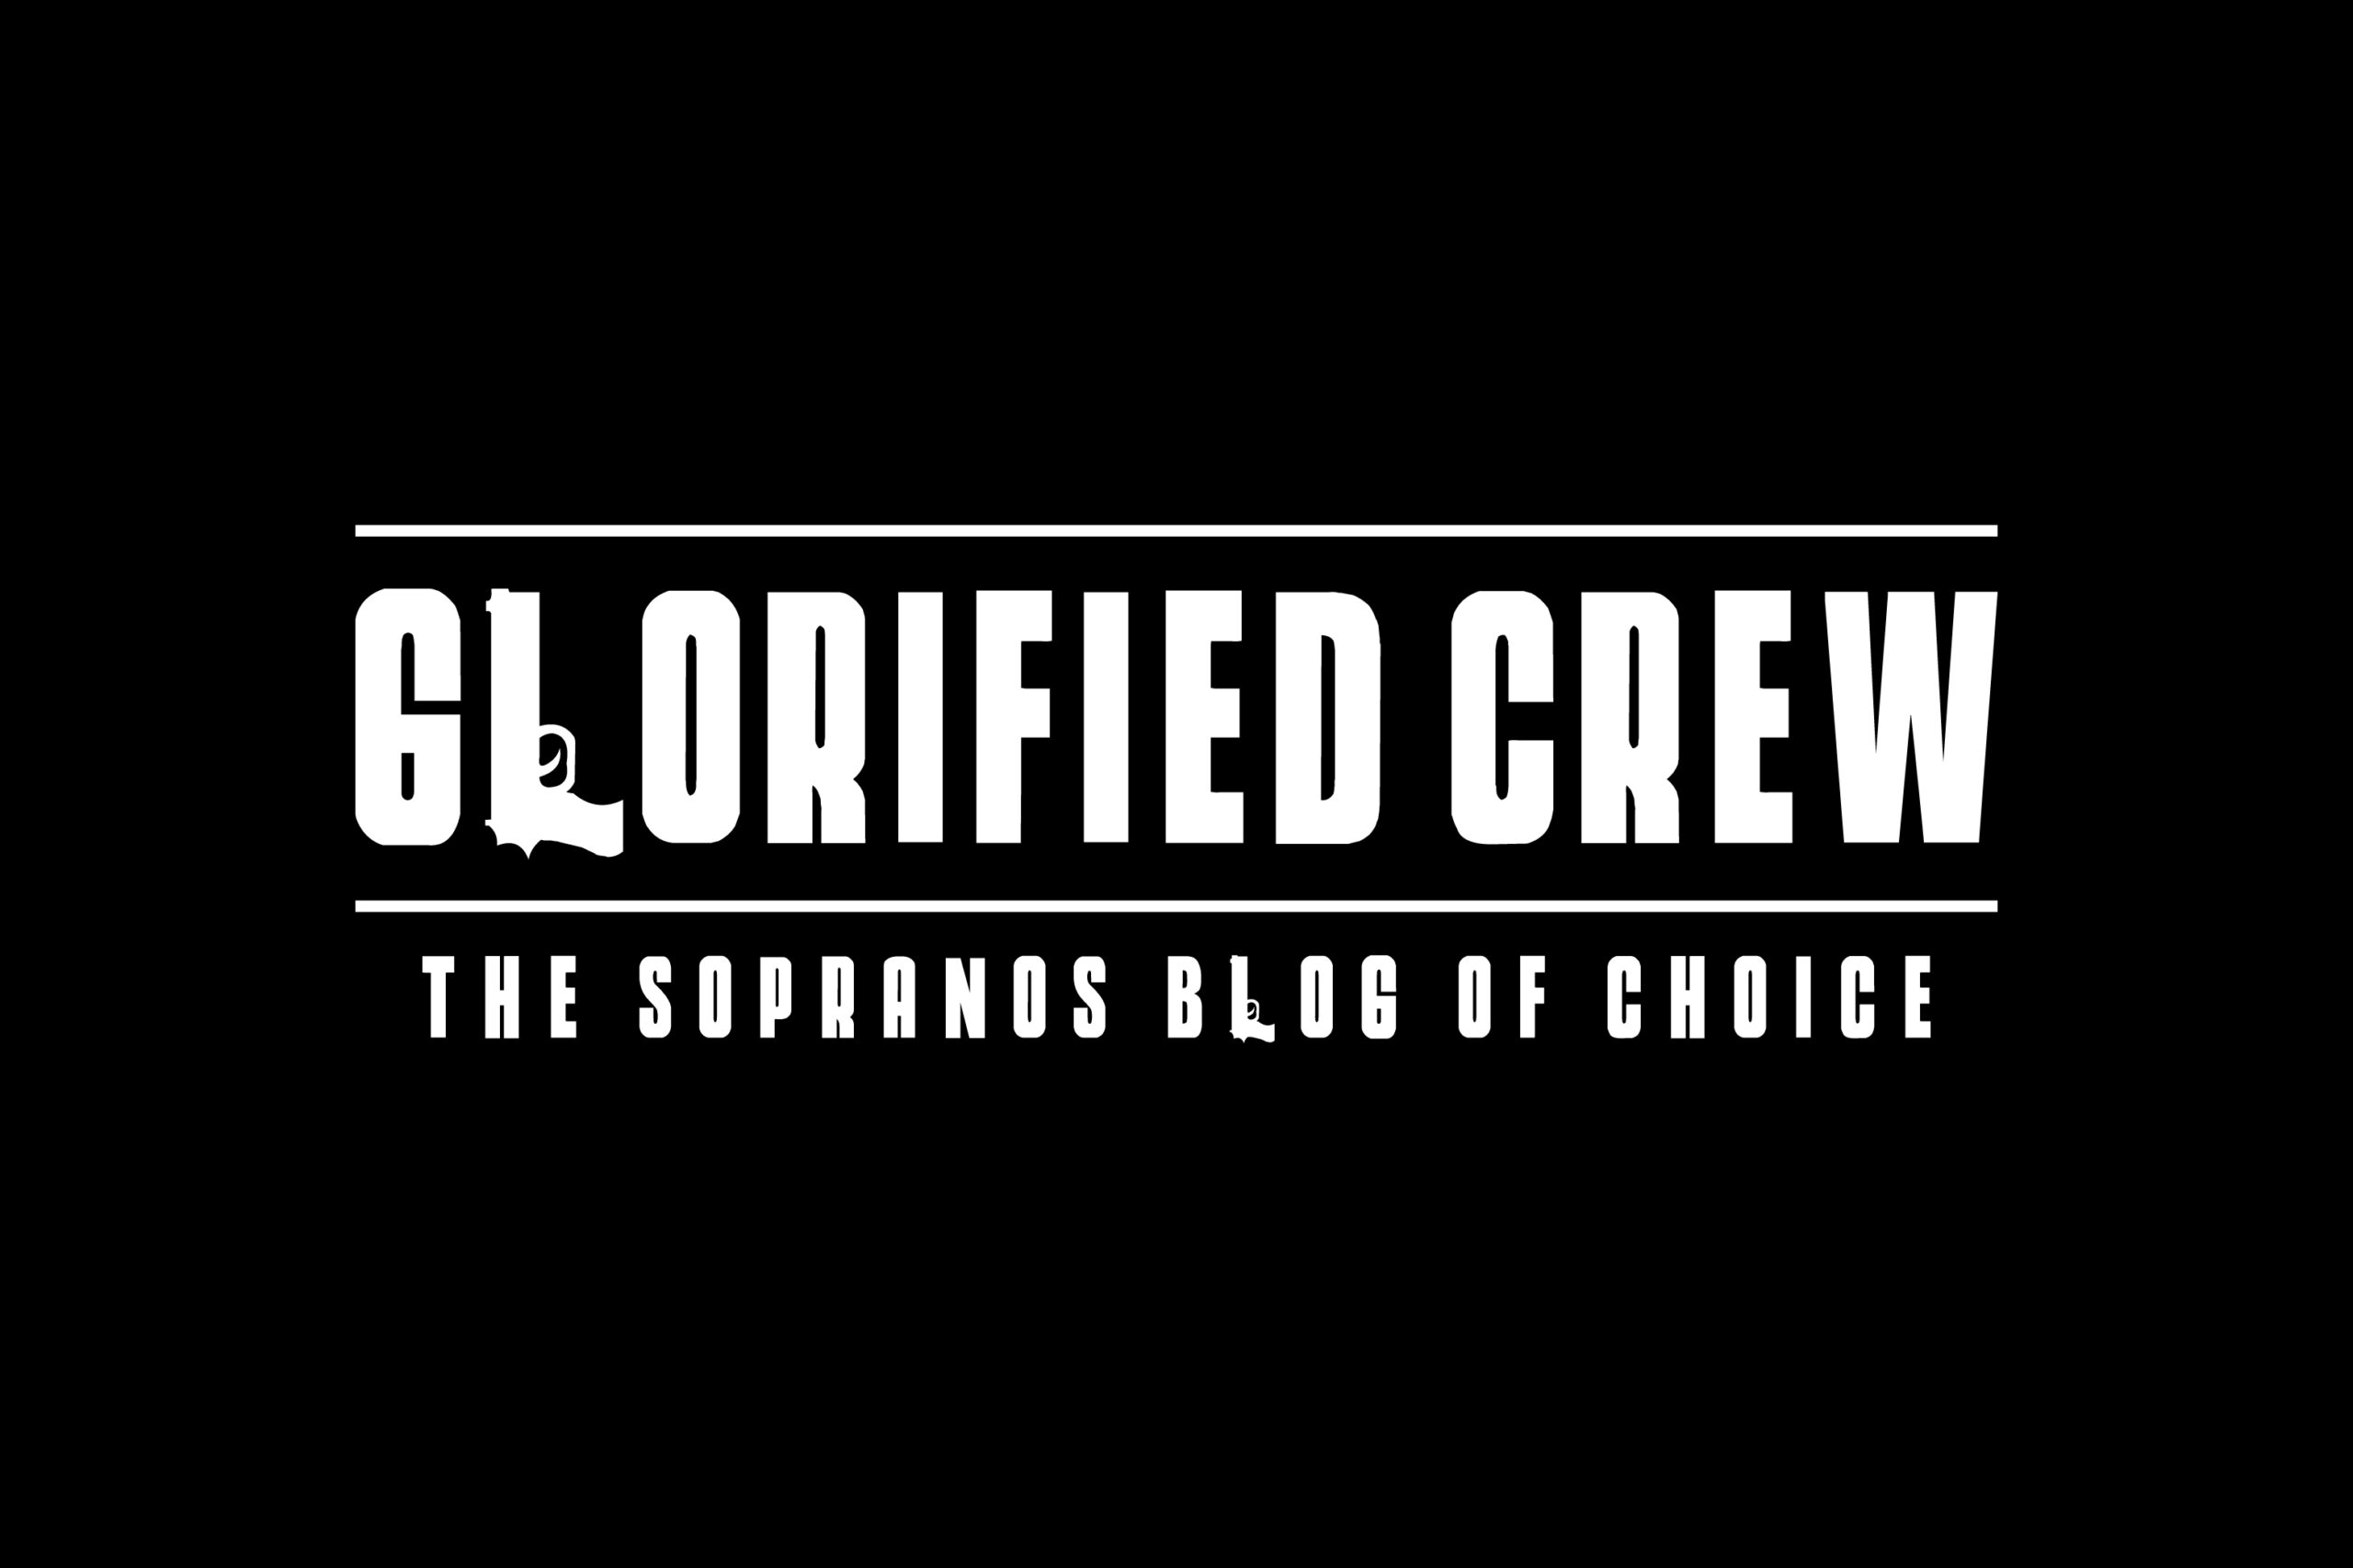 The Glorified Crew Sopranos Blog is The Sopranos Blog of Choice